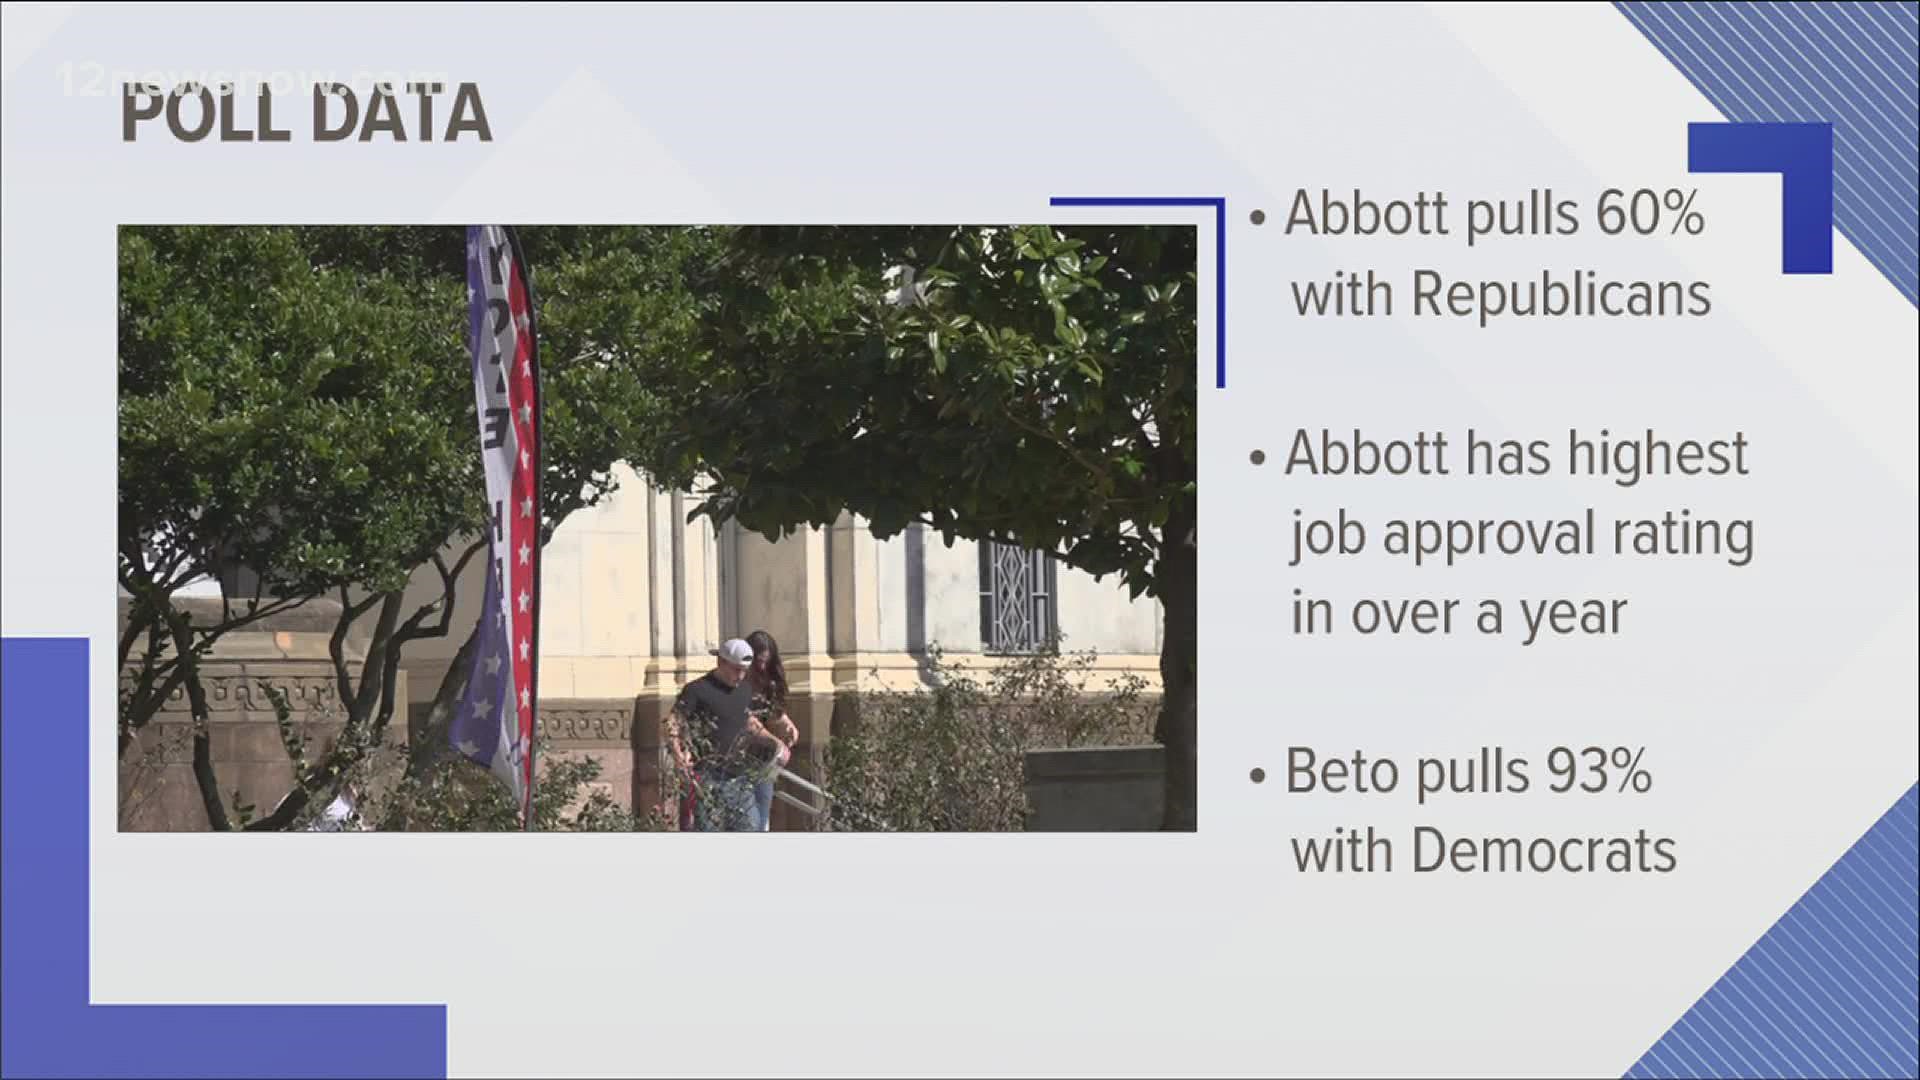 Abbott is leading O'Rourke by 10 percentage points.